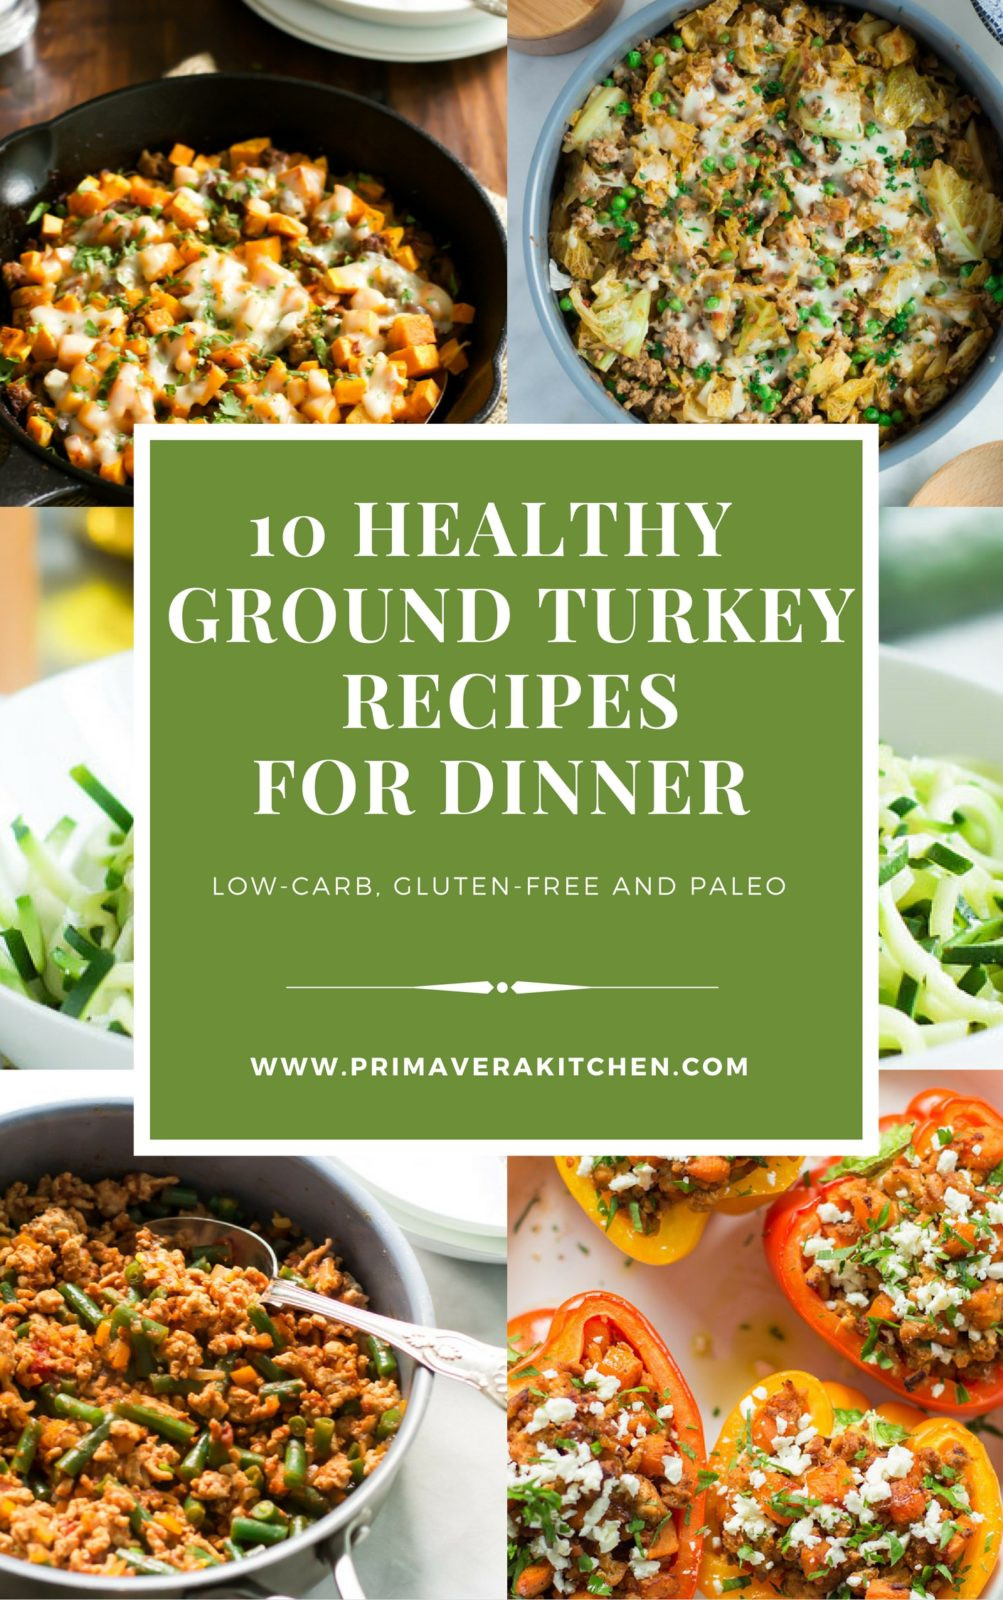 Healthy Recipes With Ground Turkey
 10 Healthy Ground Turkey Recipes for Dinner Primavera